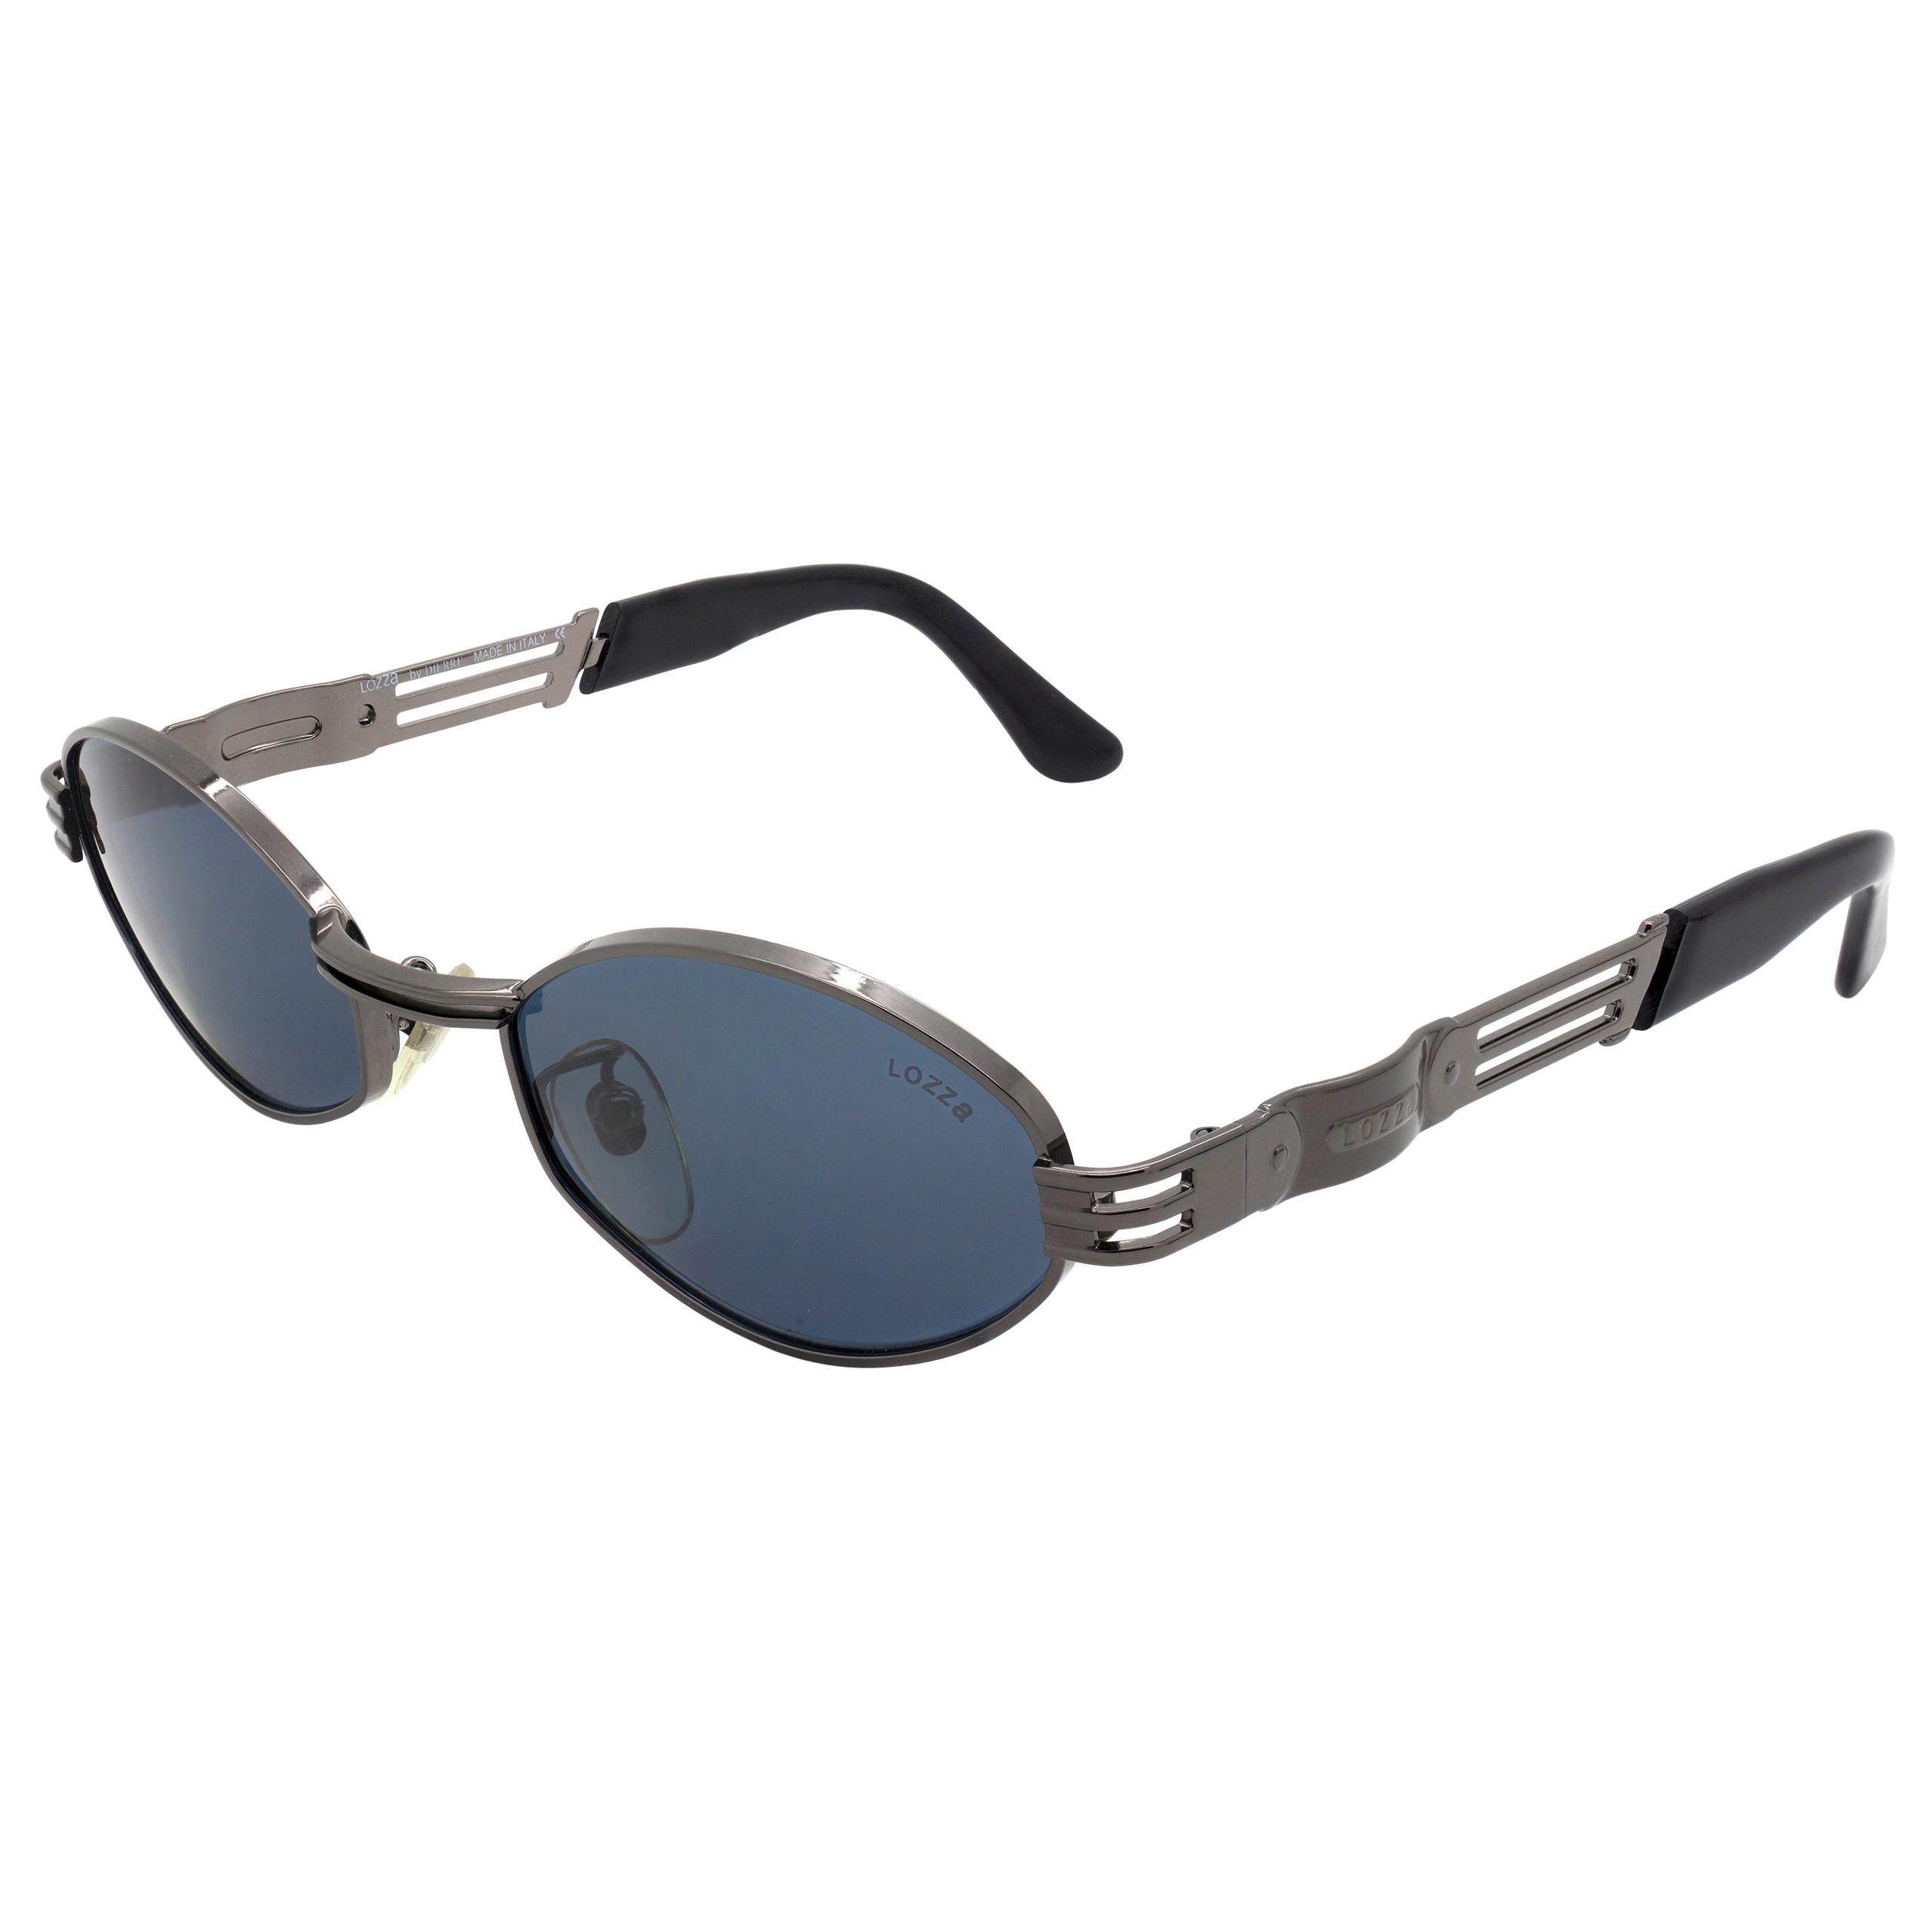 Vintage sunglasses by Lozza, 80s hexagonal sunglasses For Sale